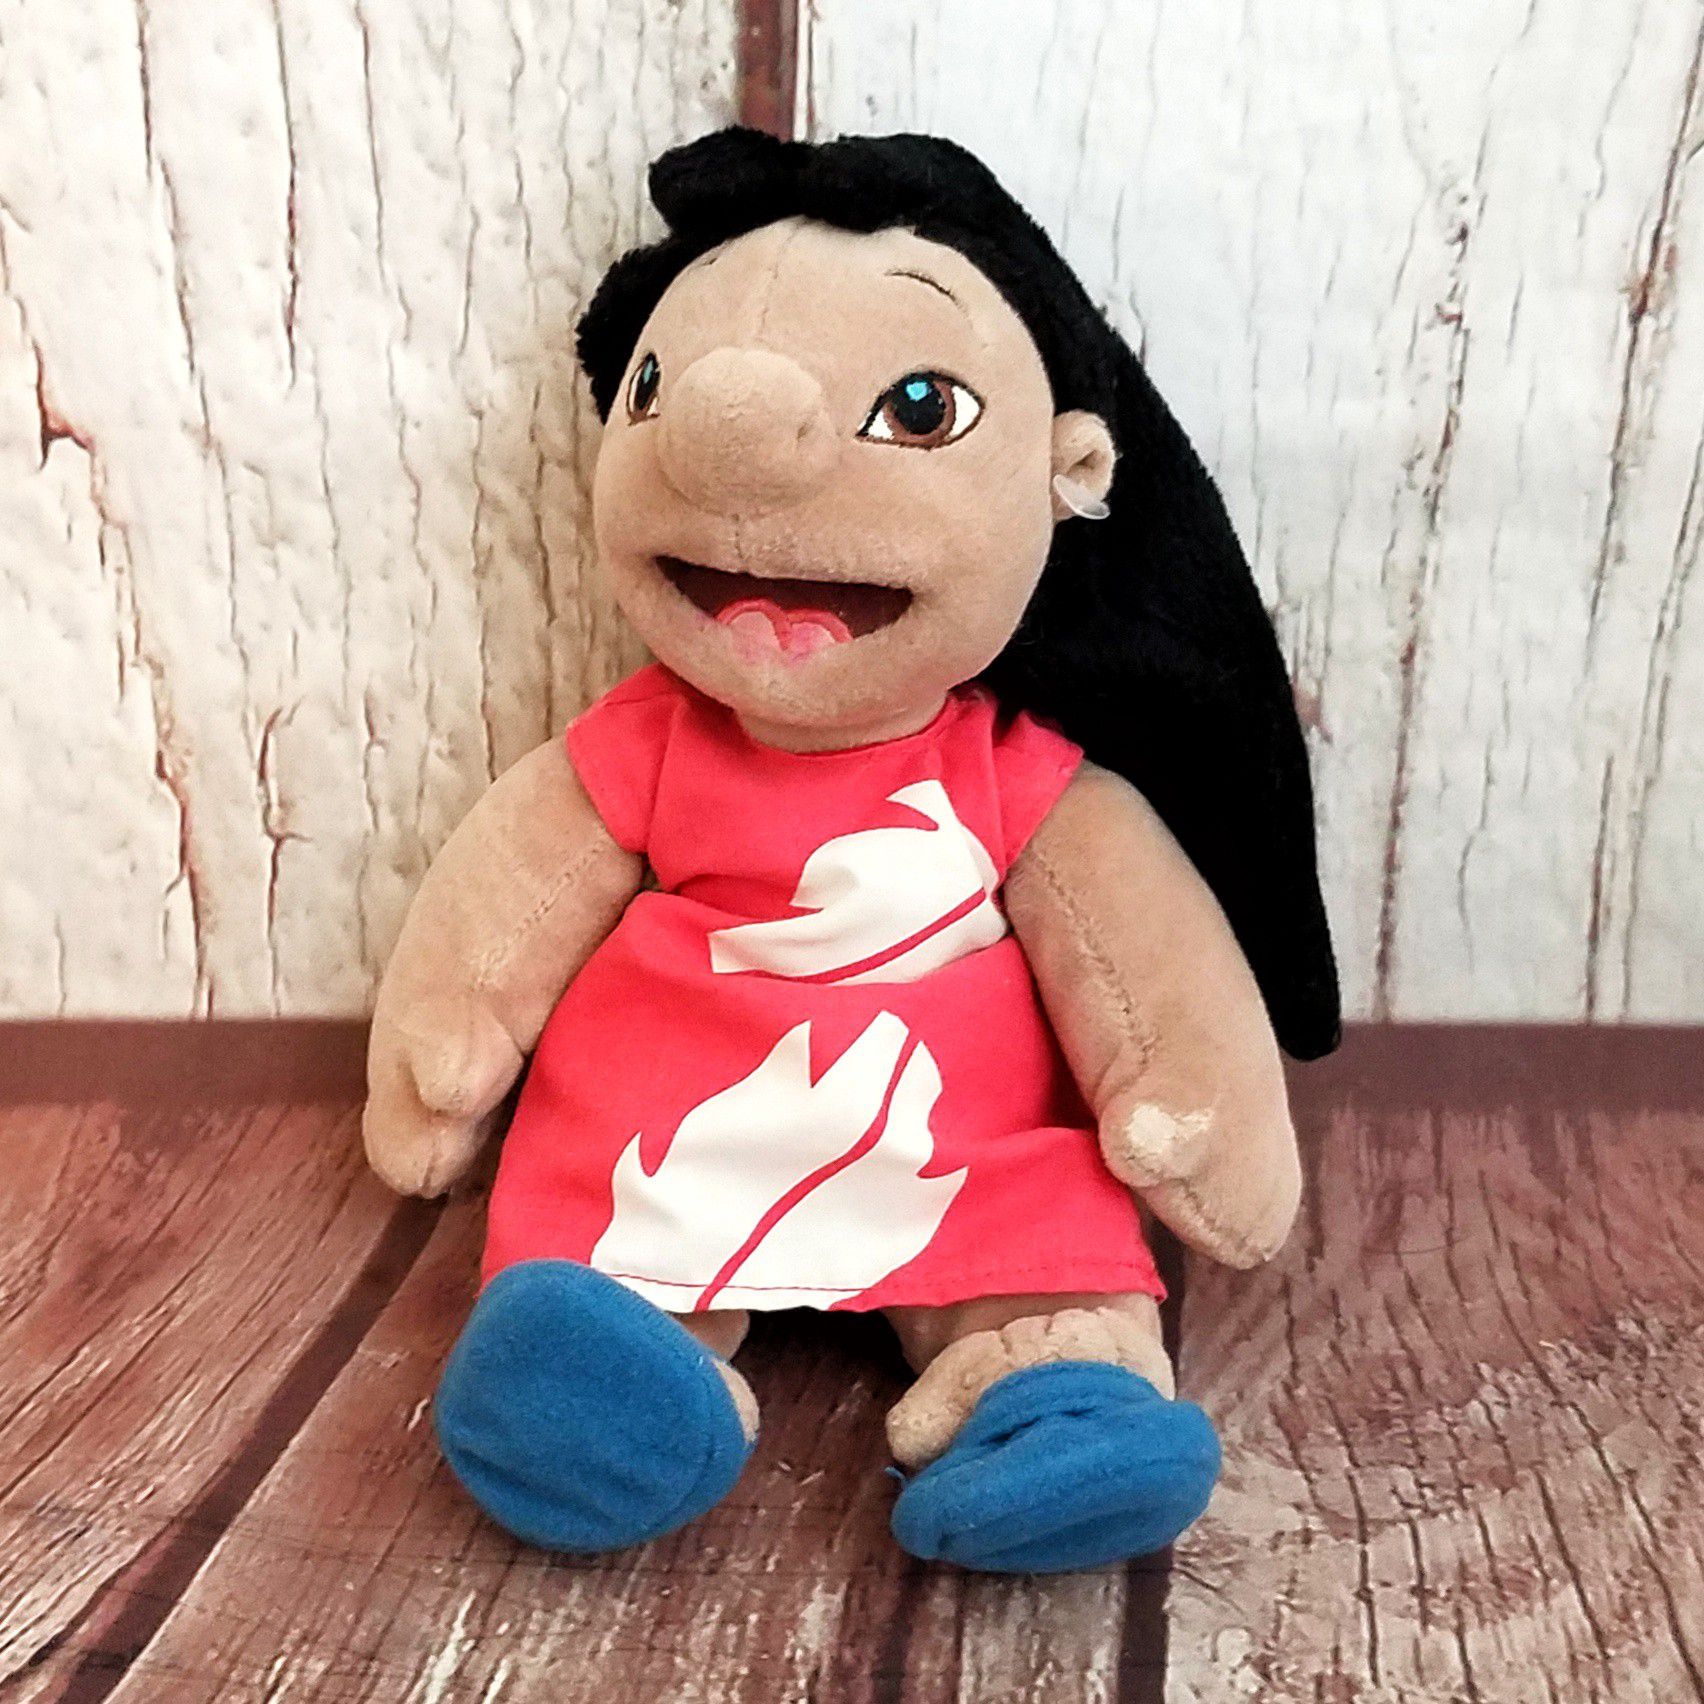 Disney Store Lilo & Stitch Plush 8" Doll